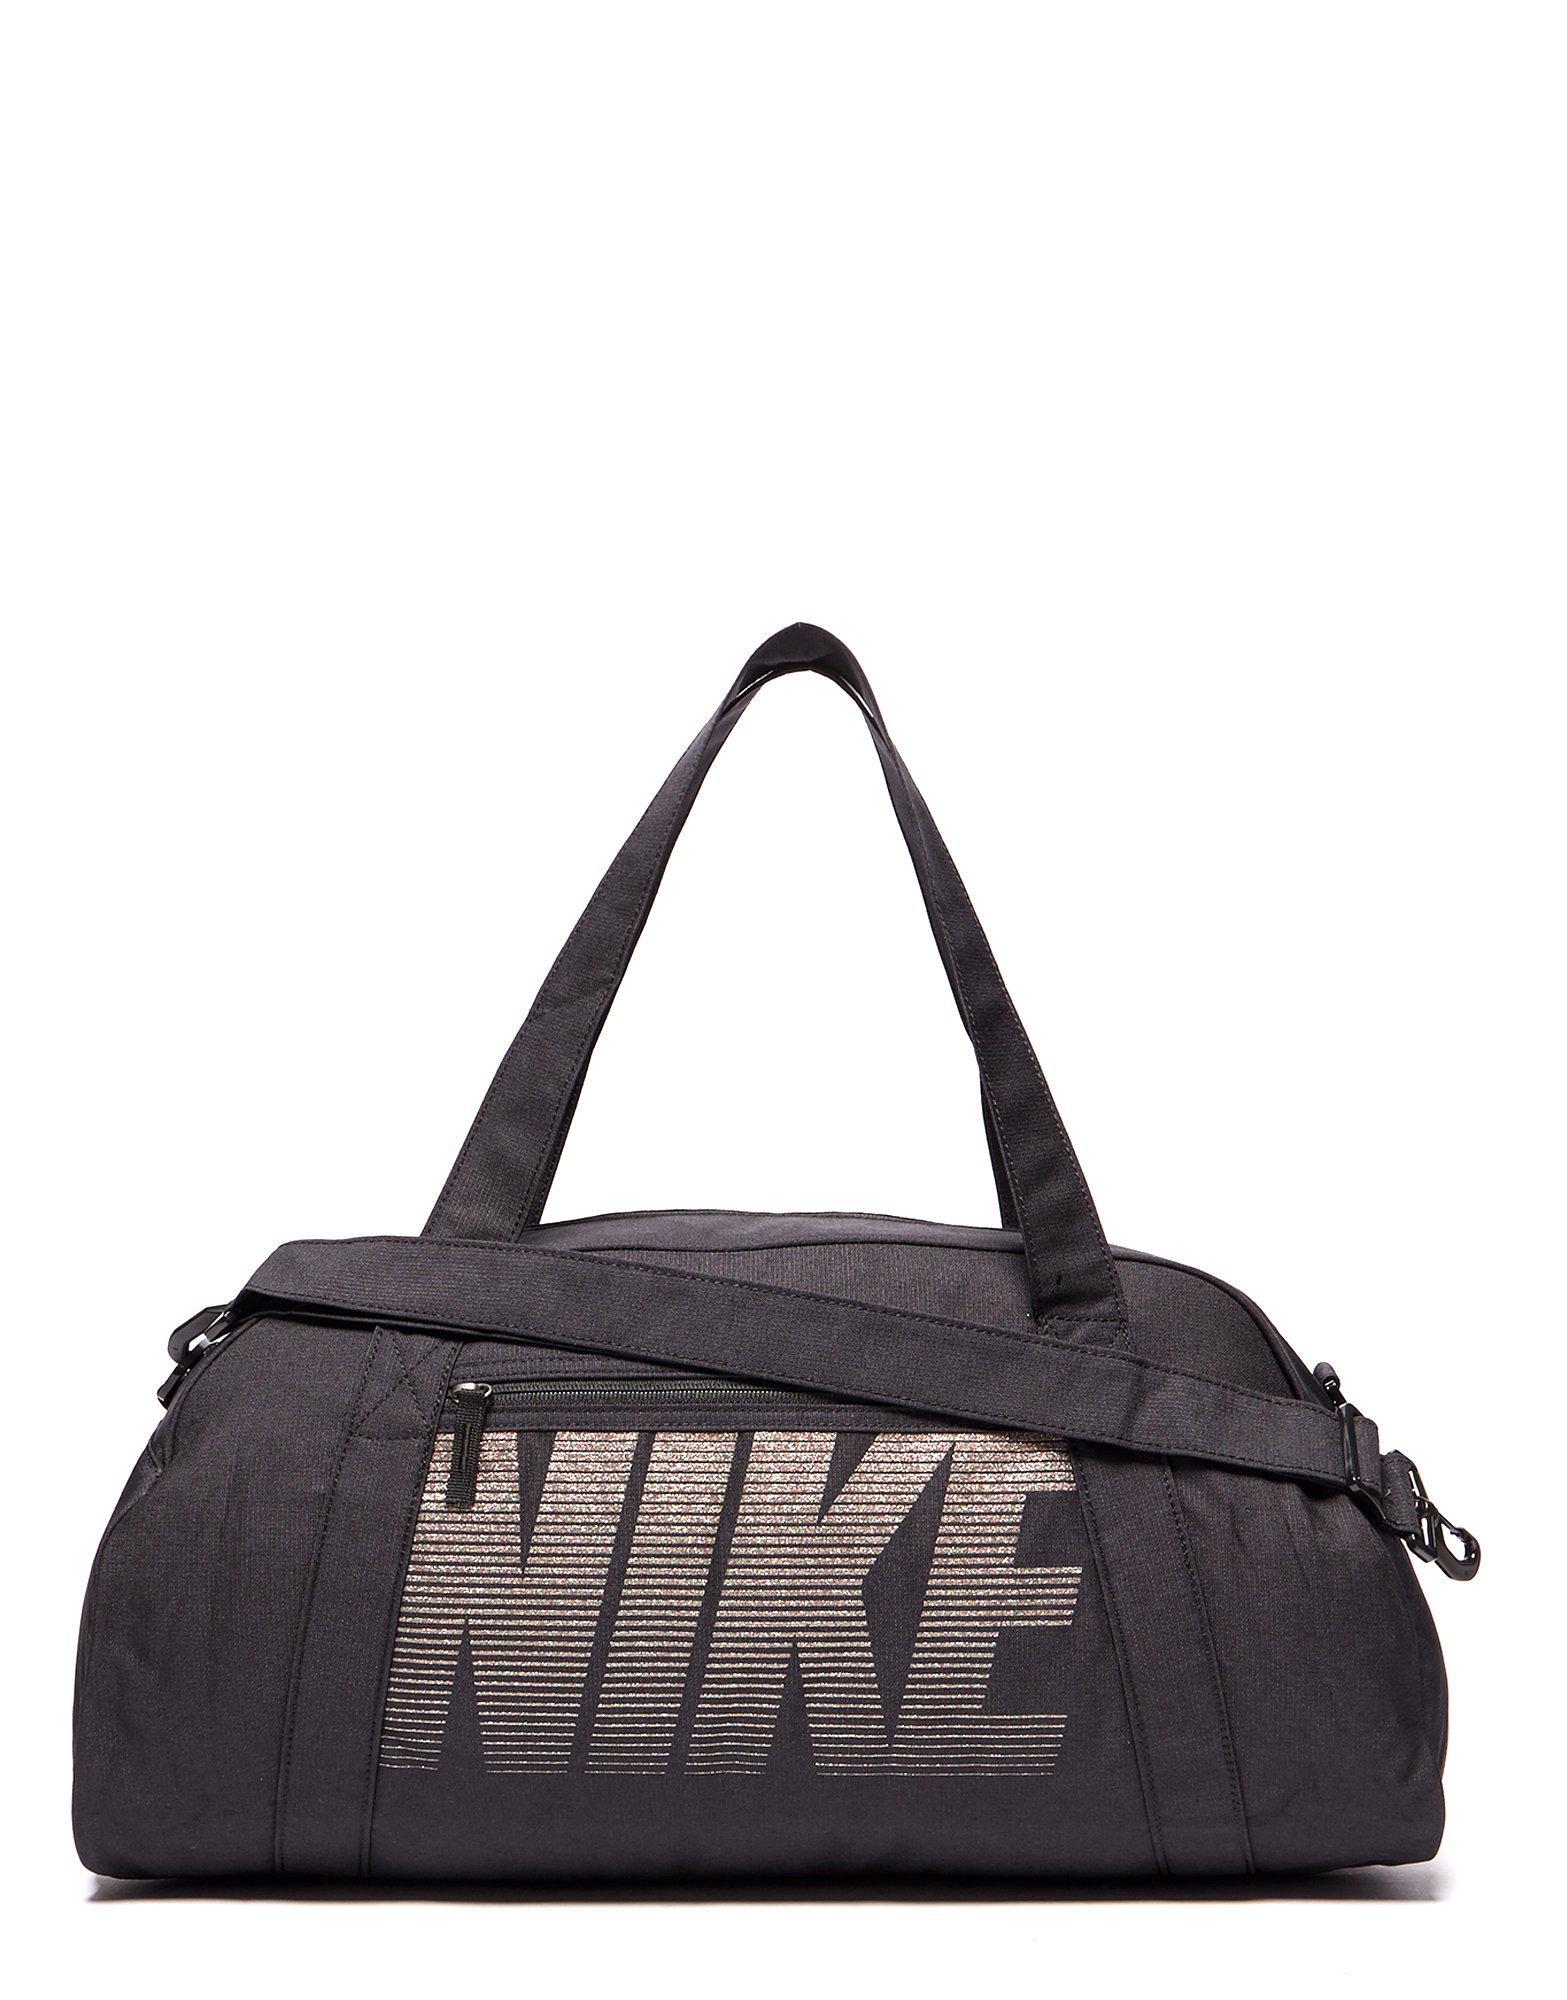 Nike Synthetic Gym Club Training Duffle Bag in Black for Men - Lyst